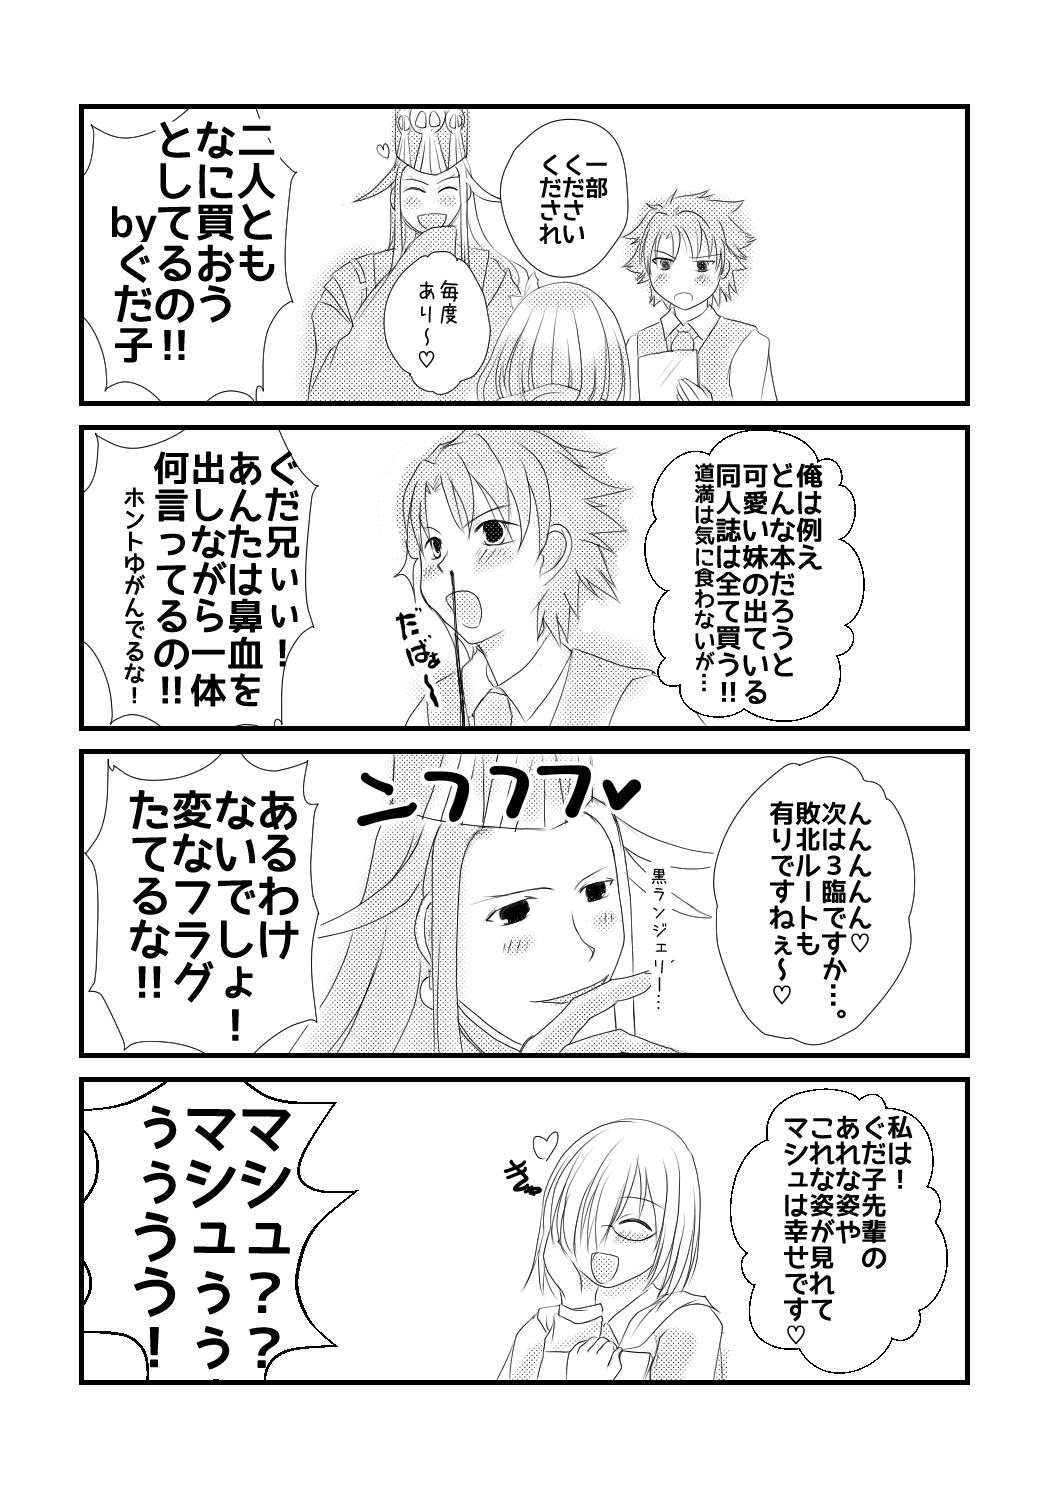 Gaystraight ] Rin guda ♀ rakugaki guda yuru manga(Fate/Grand Order] - Fate grand order Cock Sucking - Page 7